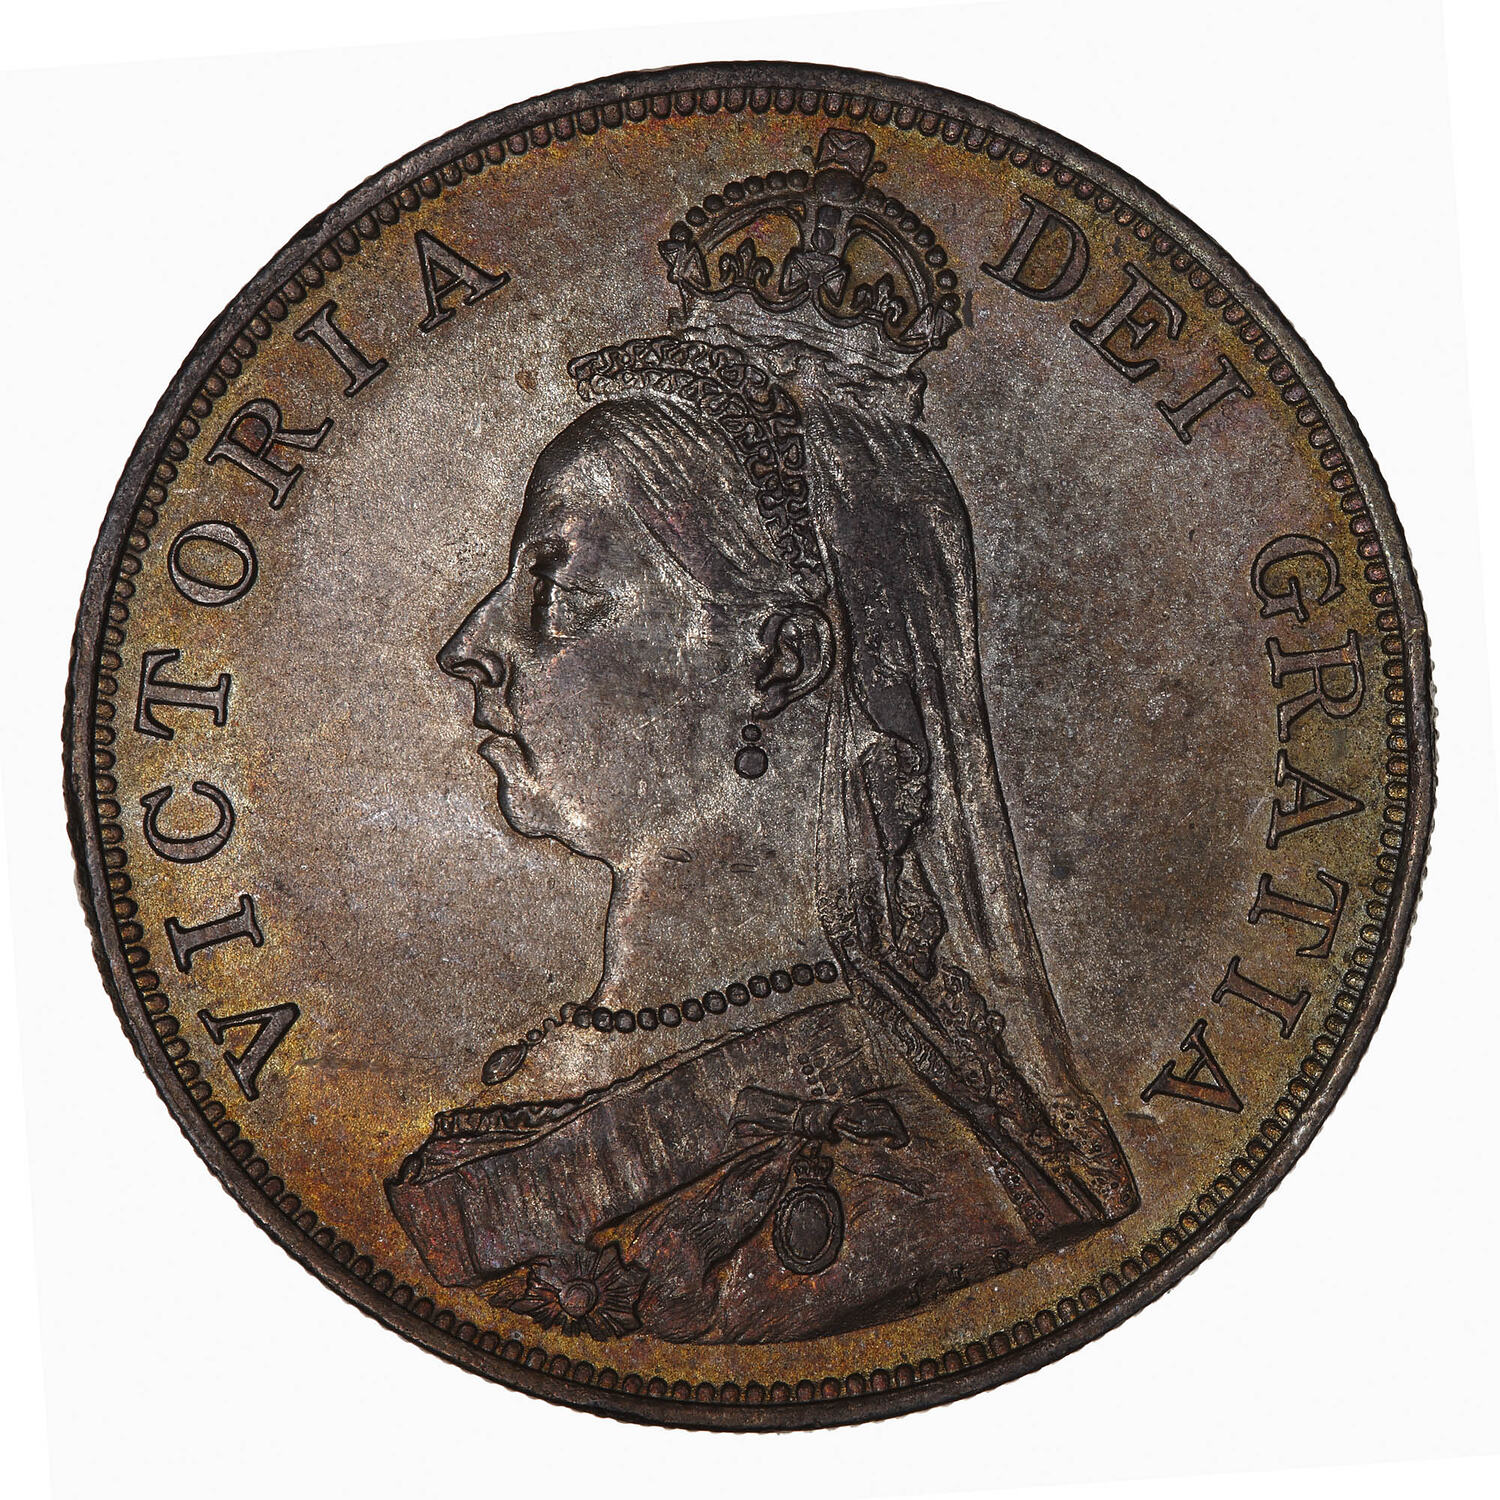 Coin - Double-florin, Queen Victoria, Great Britain, 1887